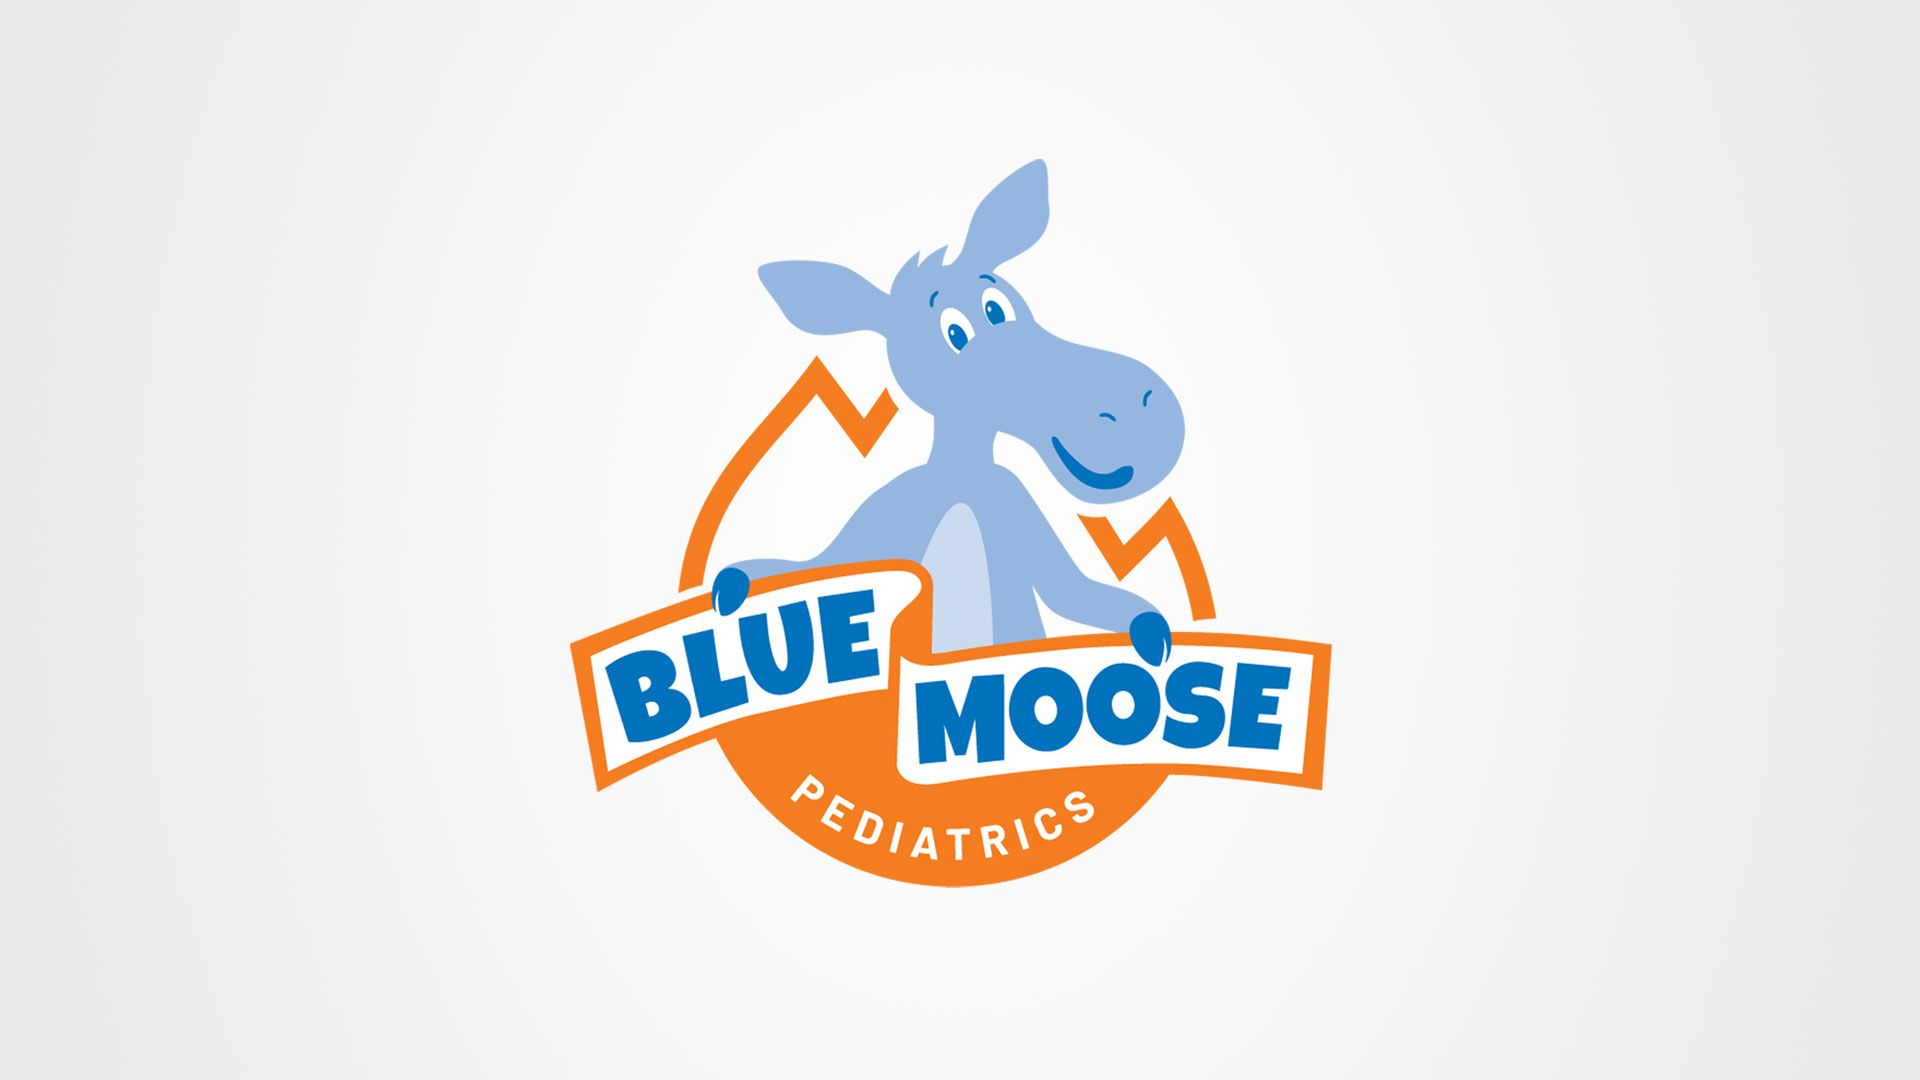 Blue-Moose-Pediatrics-Logo-1920x1080